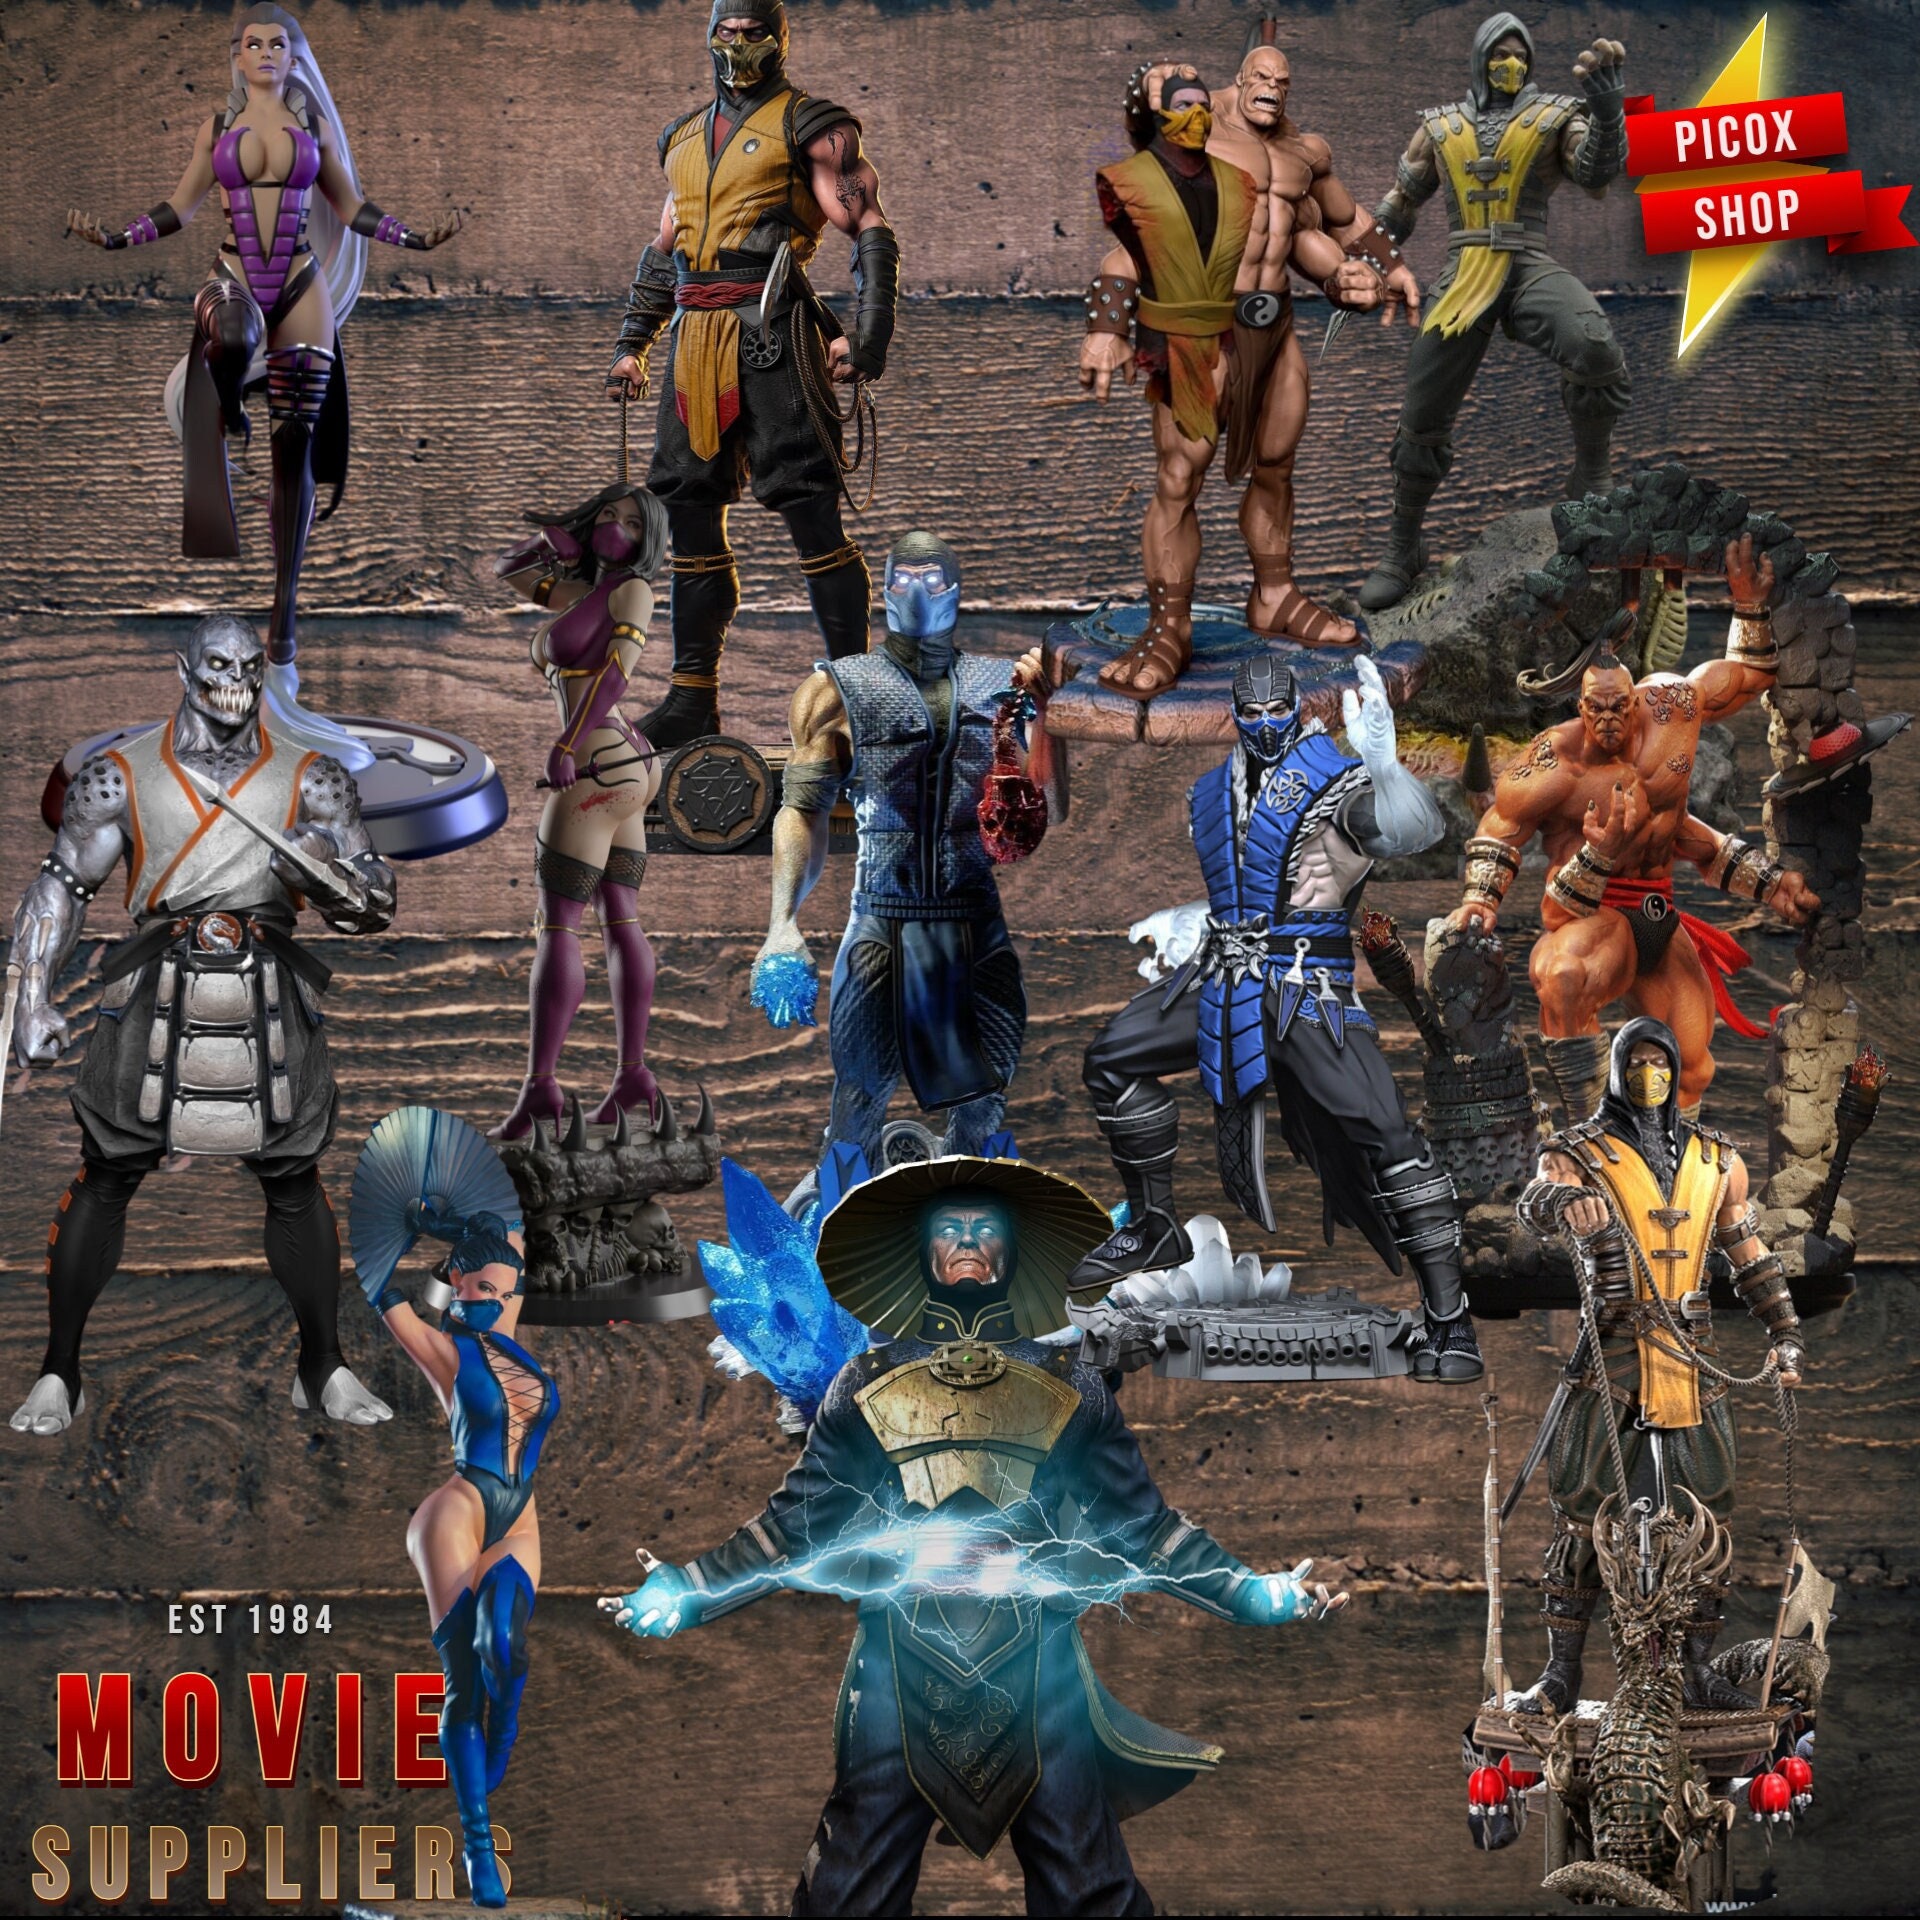 Mortal Kombat IX Baraka Deluxe Adult Latex Mask